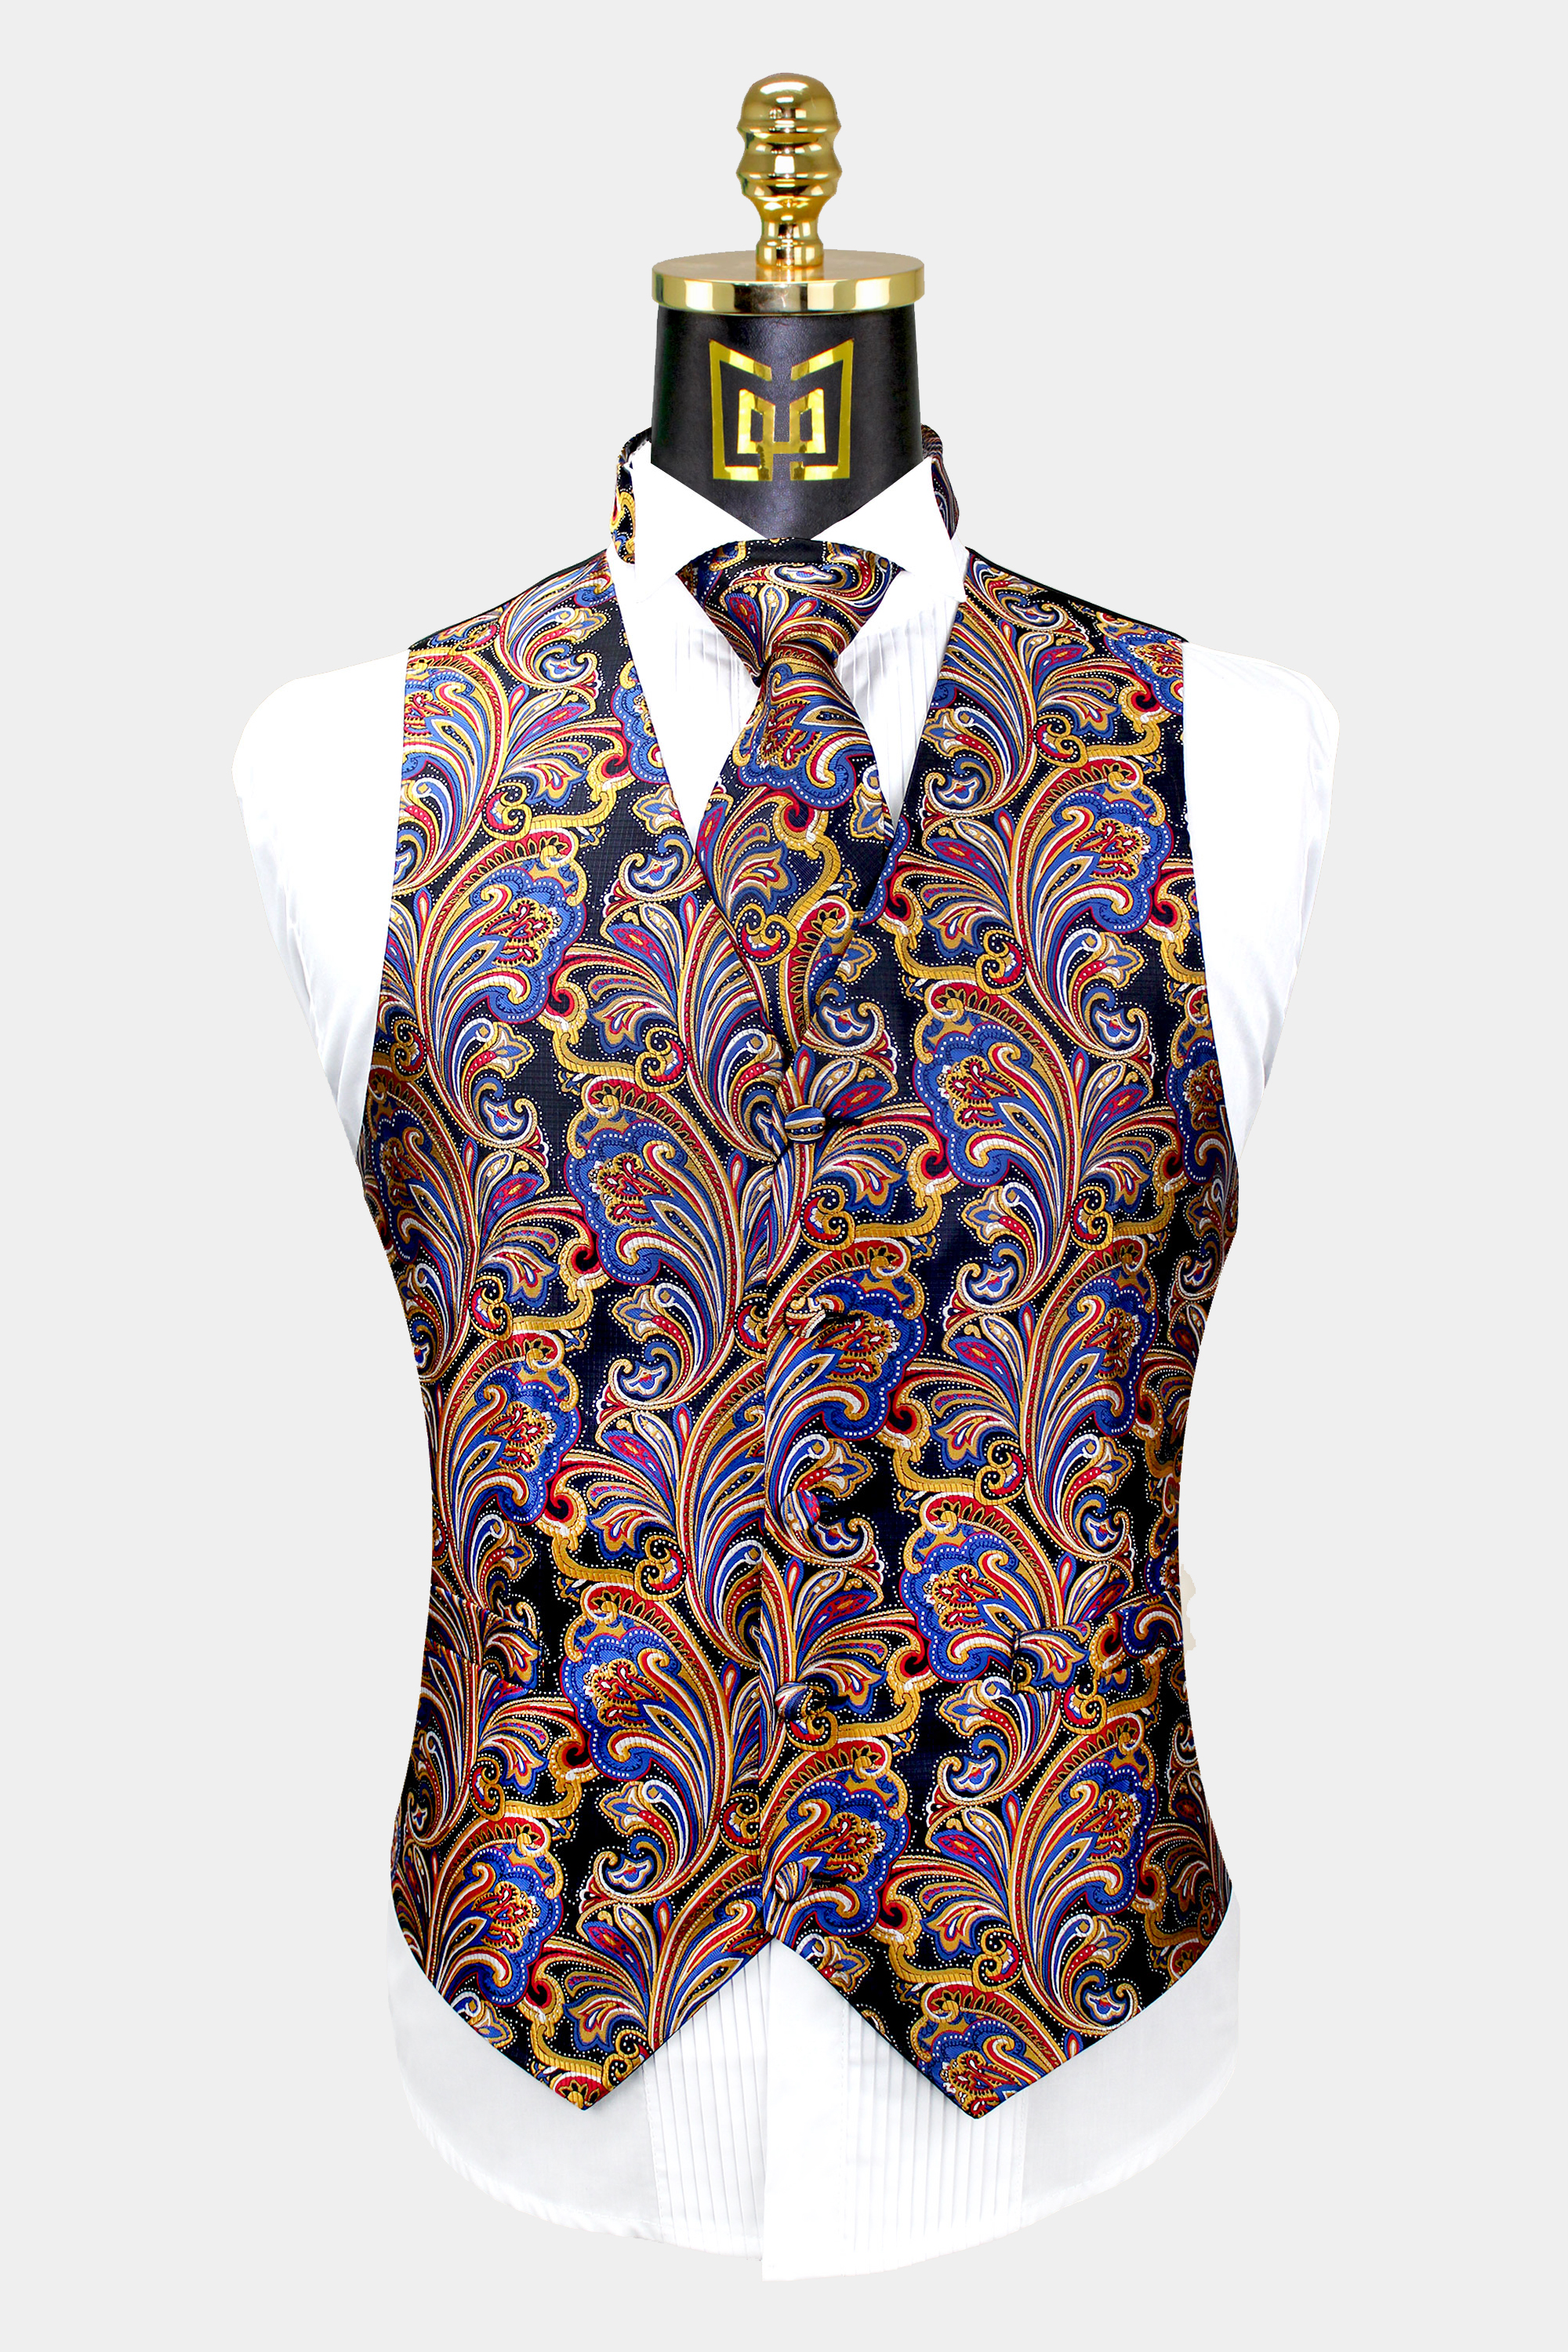 Multi-Color-Colorful-Paisley-Vest-and-Tie-Set-Wedding-Groom-Tuxedo-Vest-from-Gentlemansguru.com_